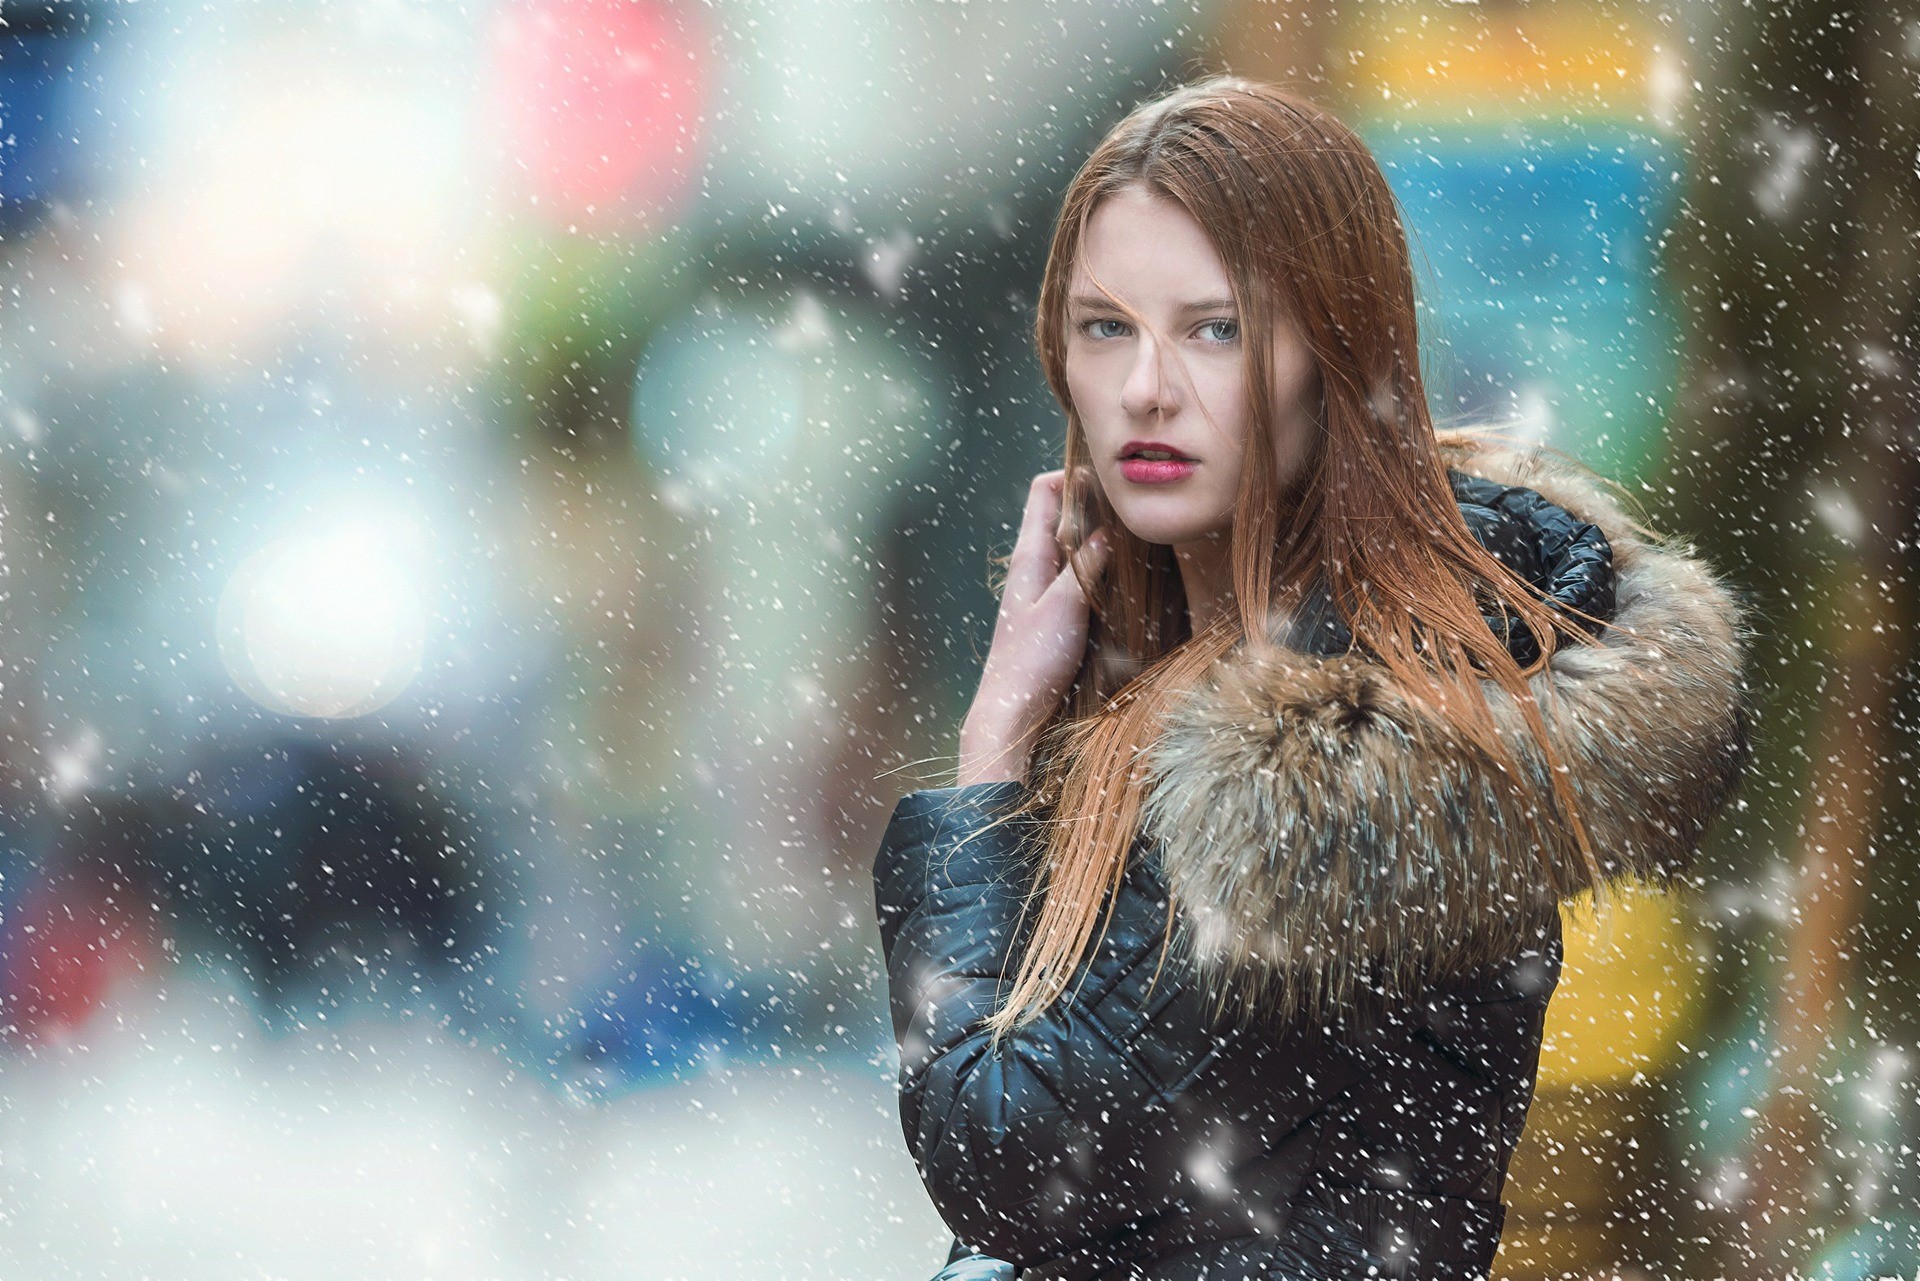 Woman looks over shoulder through snowfall